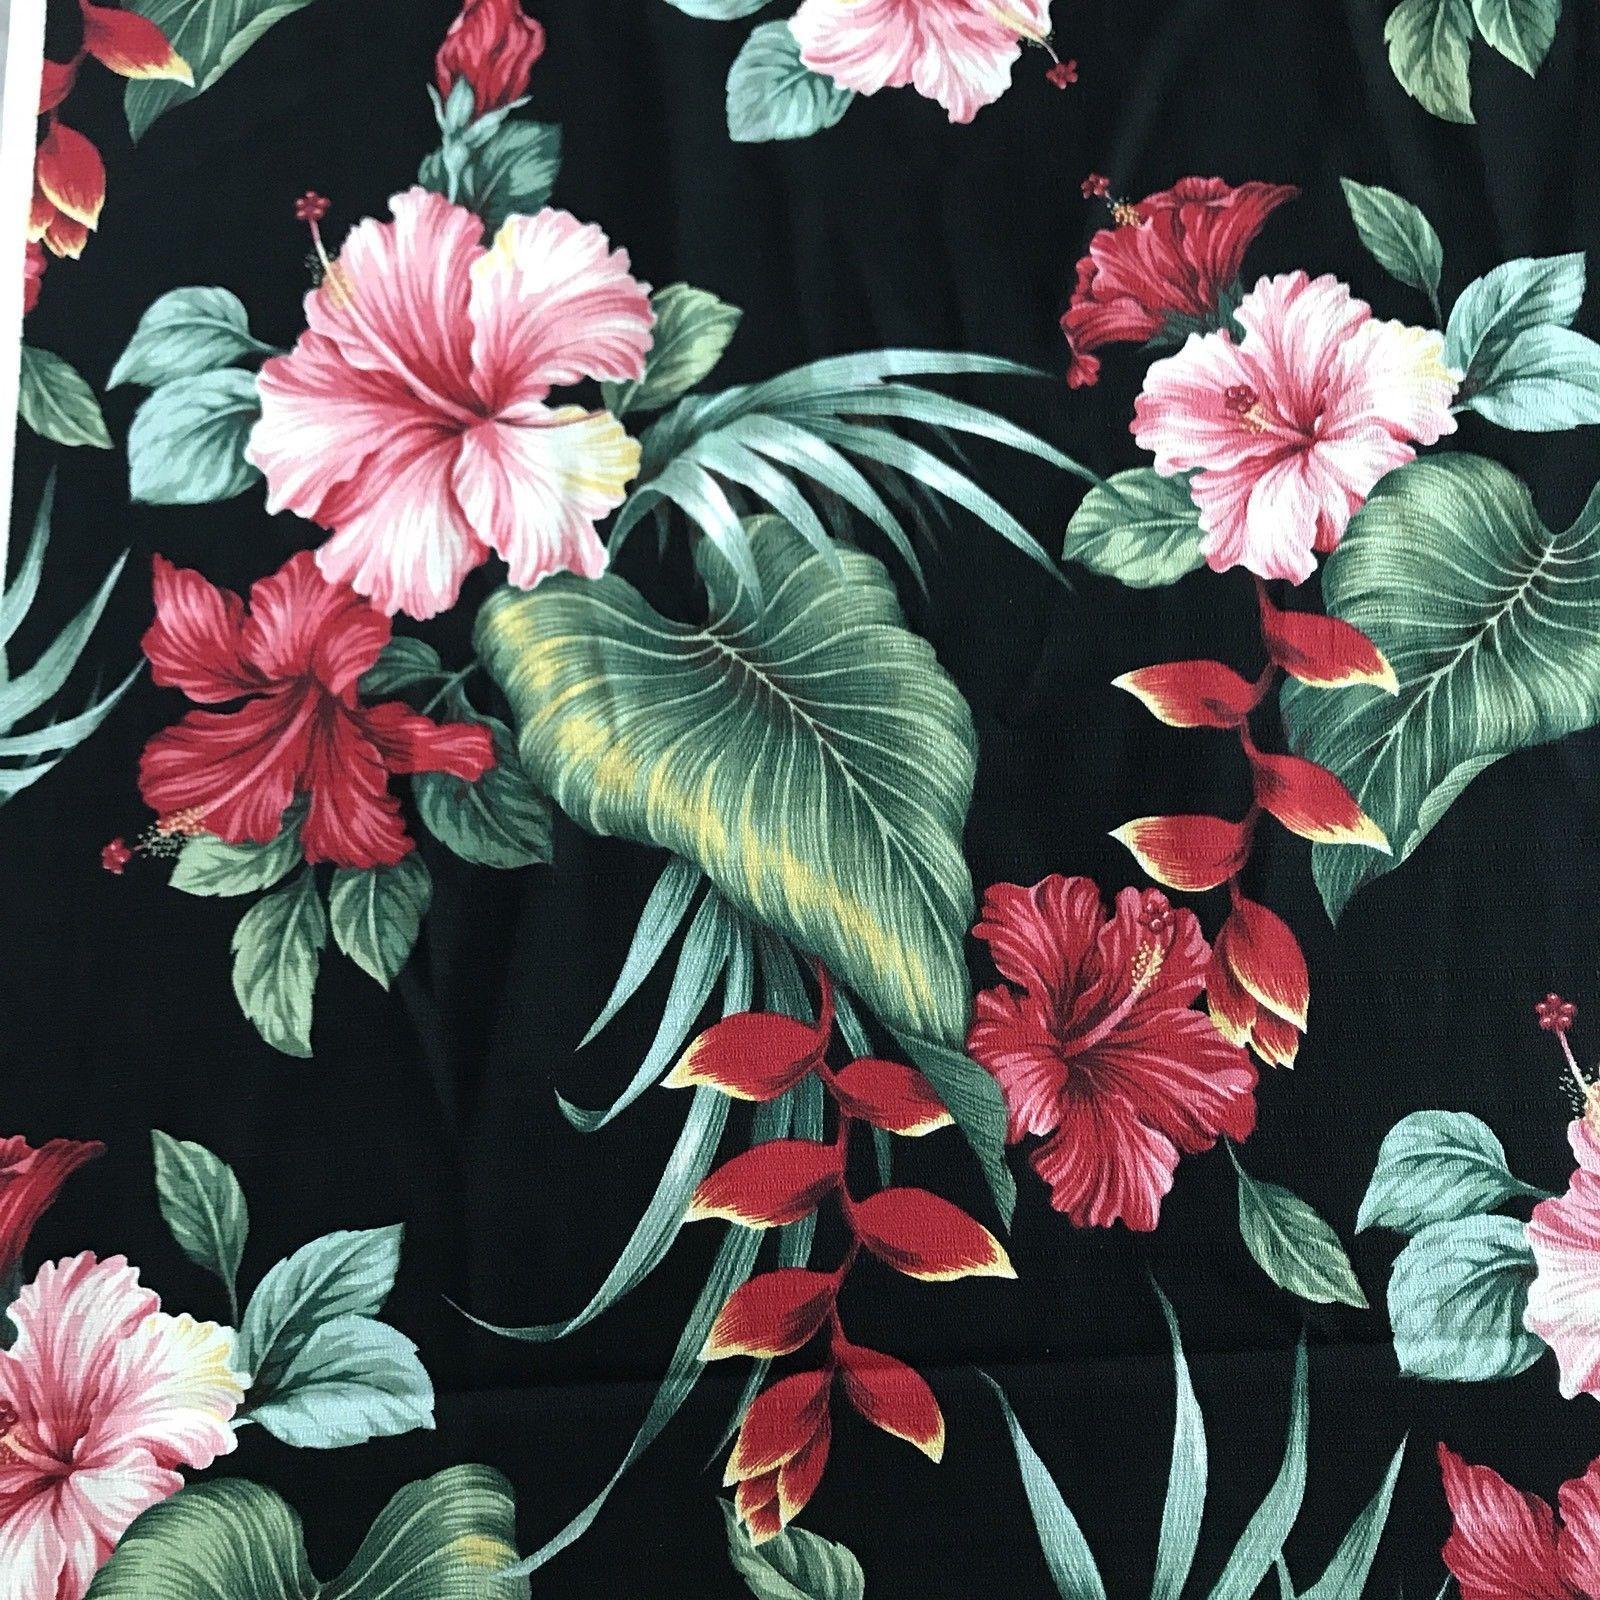 Details about Hawaiian Print Barkcloth Cotton Fabric Red & Pink